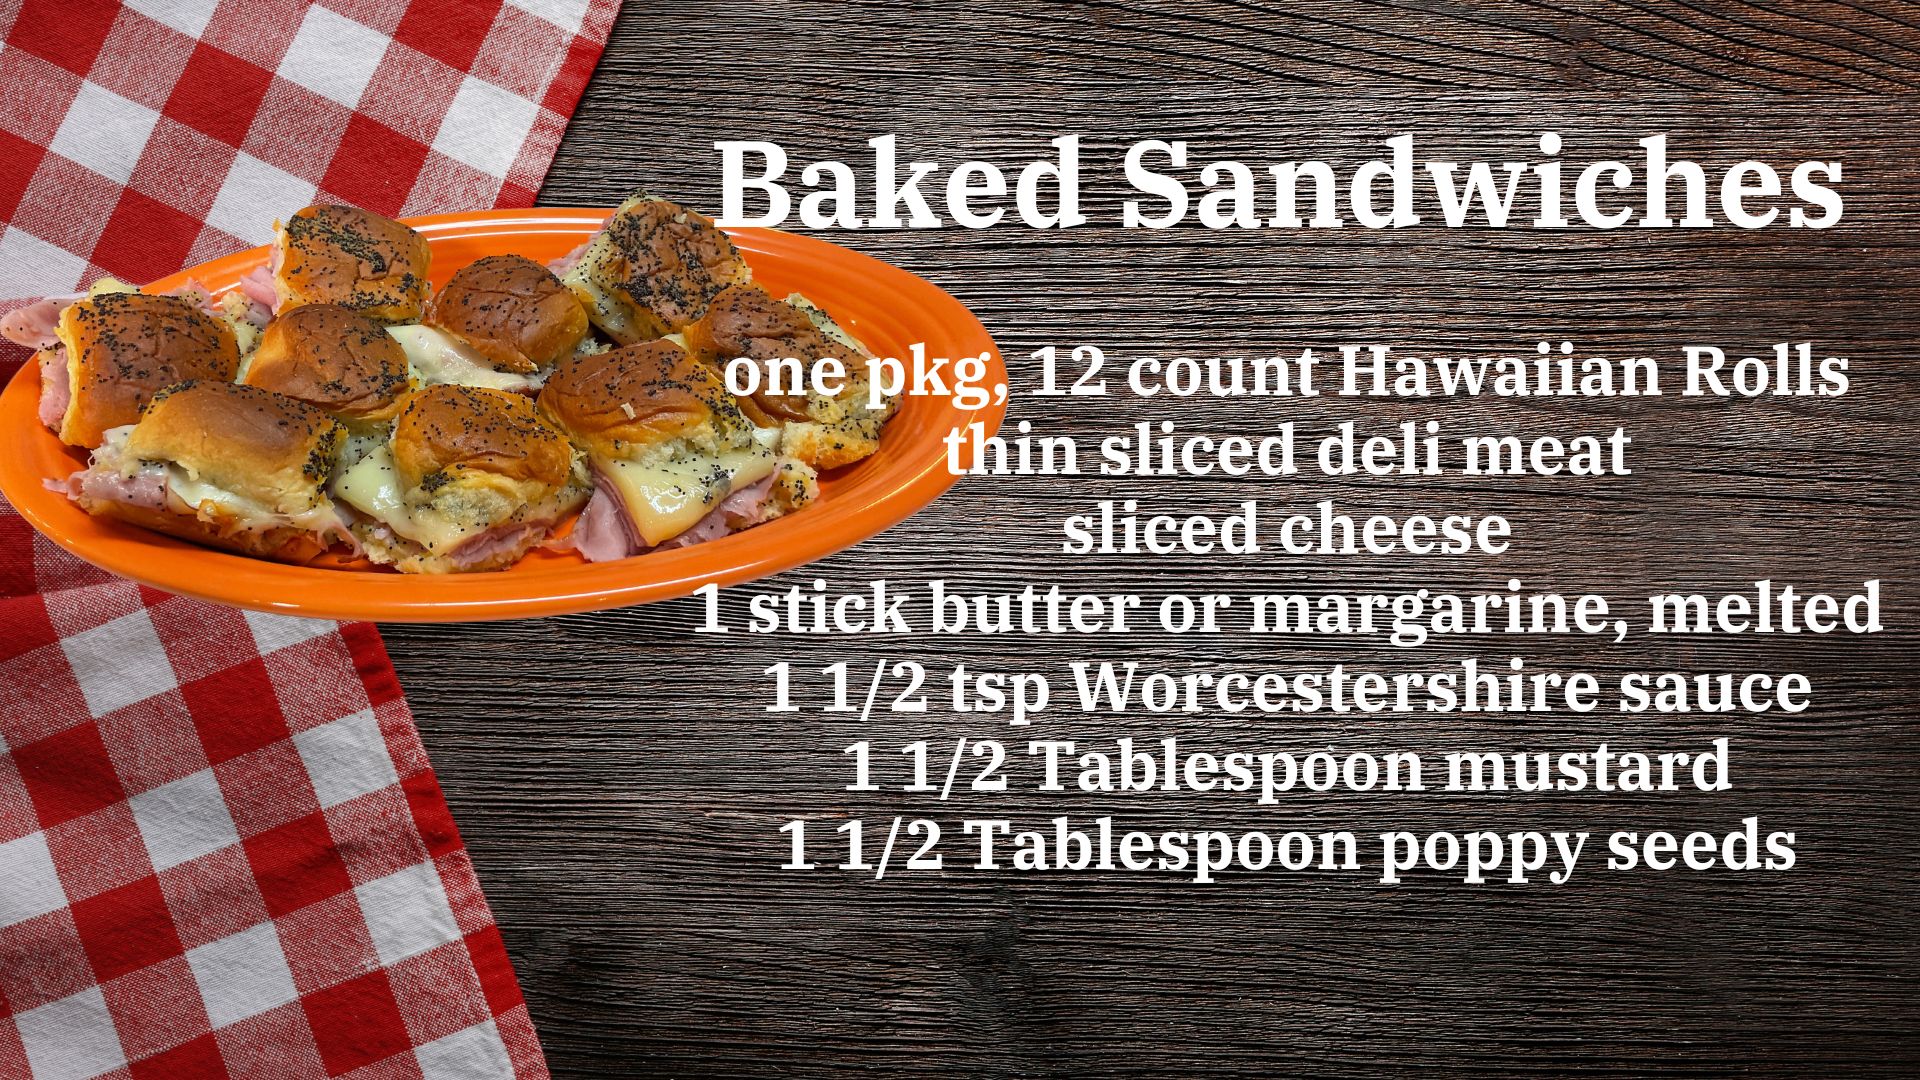 baked sandwich recipe card 1 ingredients